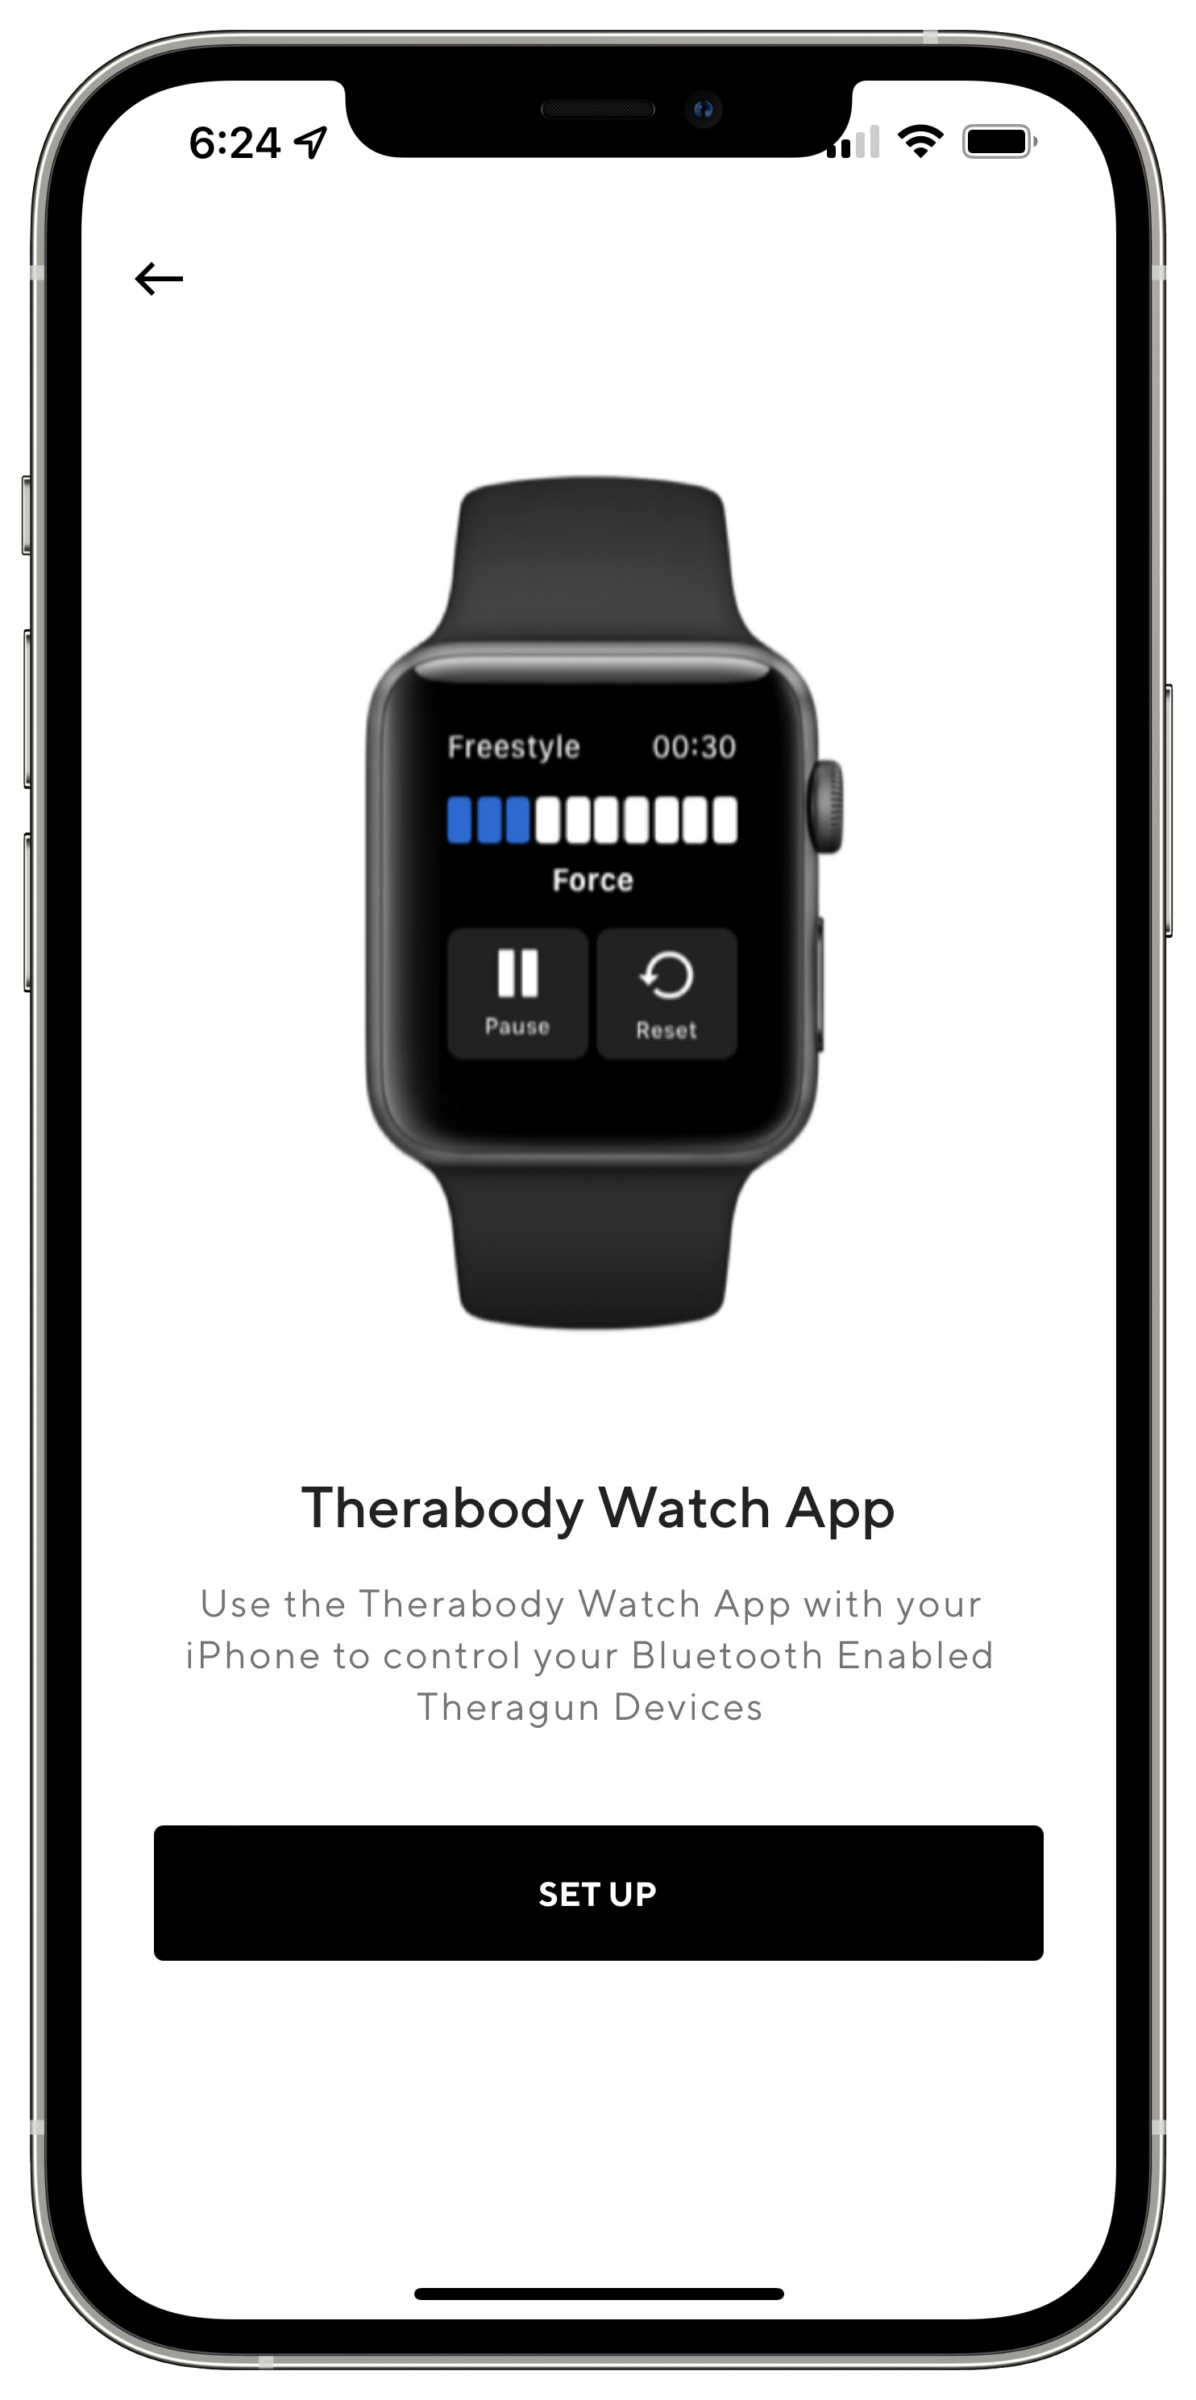 Therabody offers an Apple Watch app.